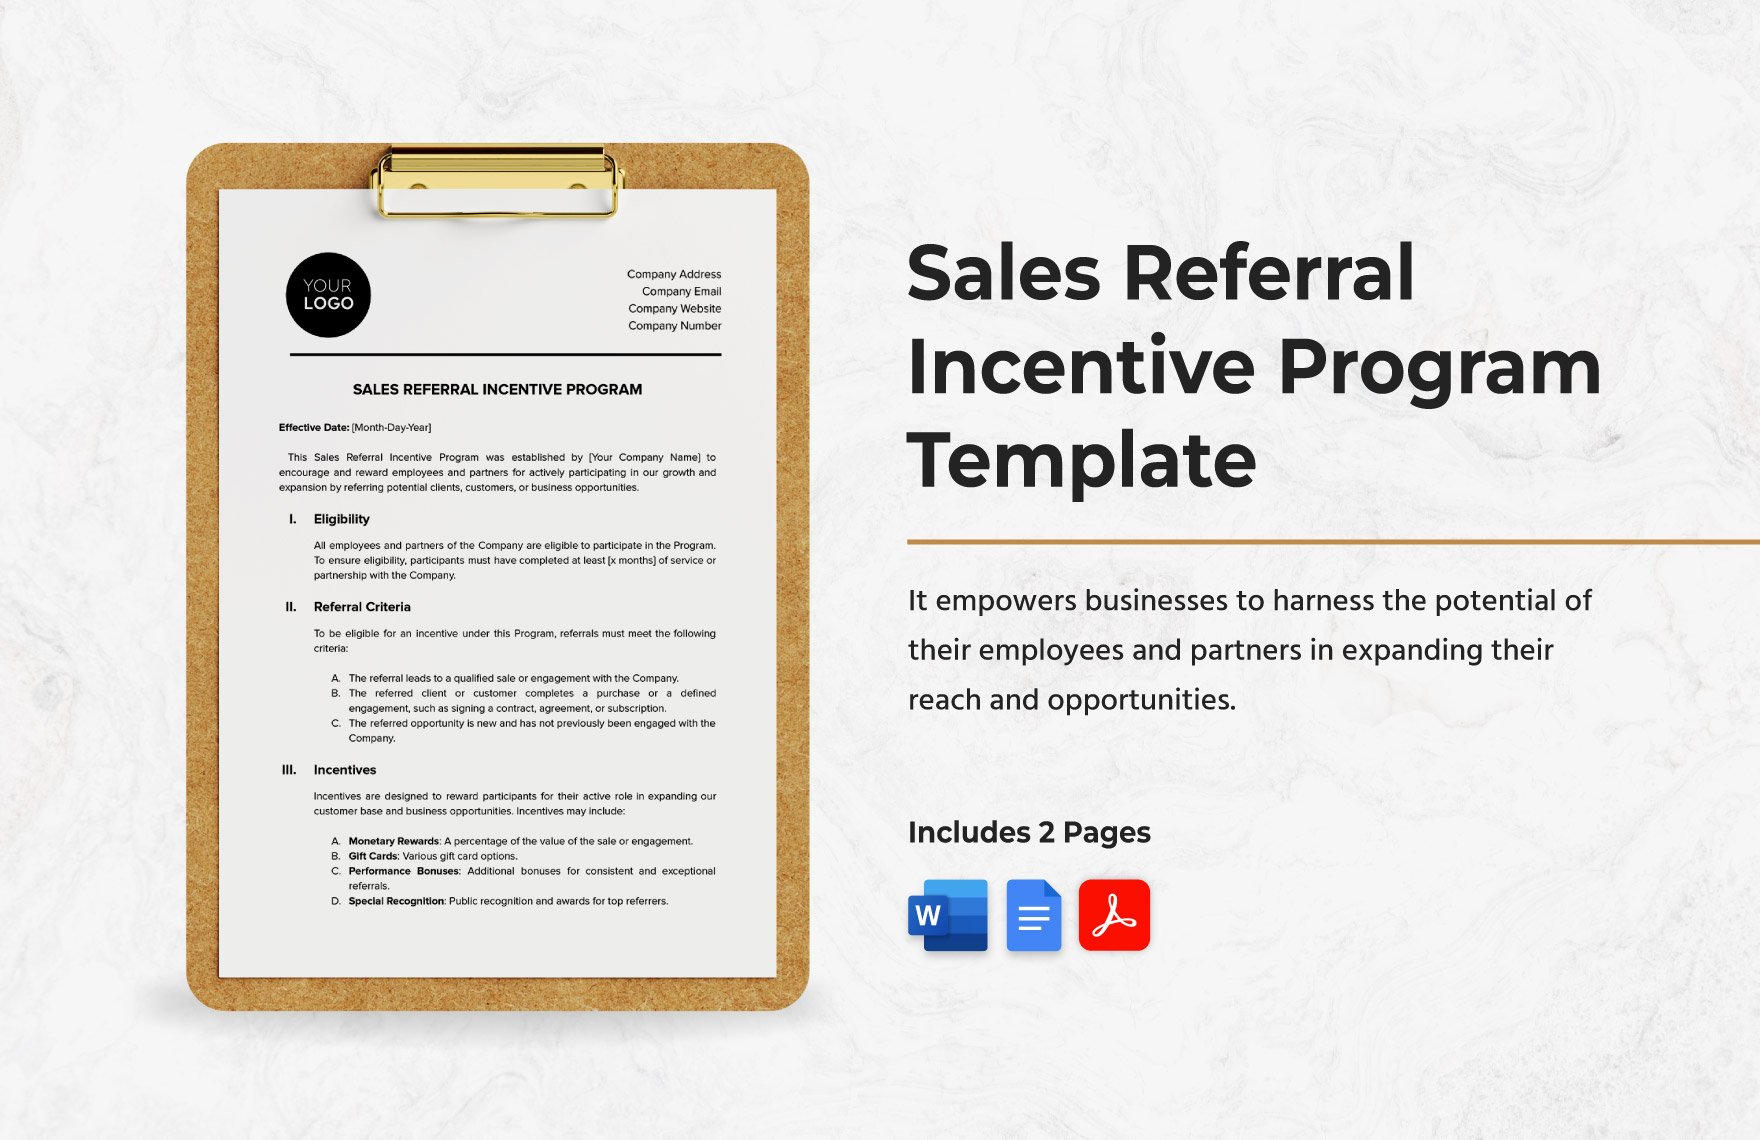 Sales Referral Incentive Program Template